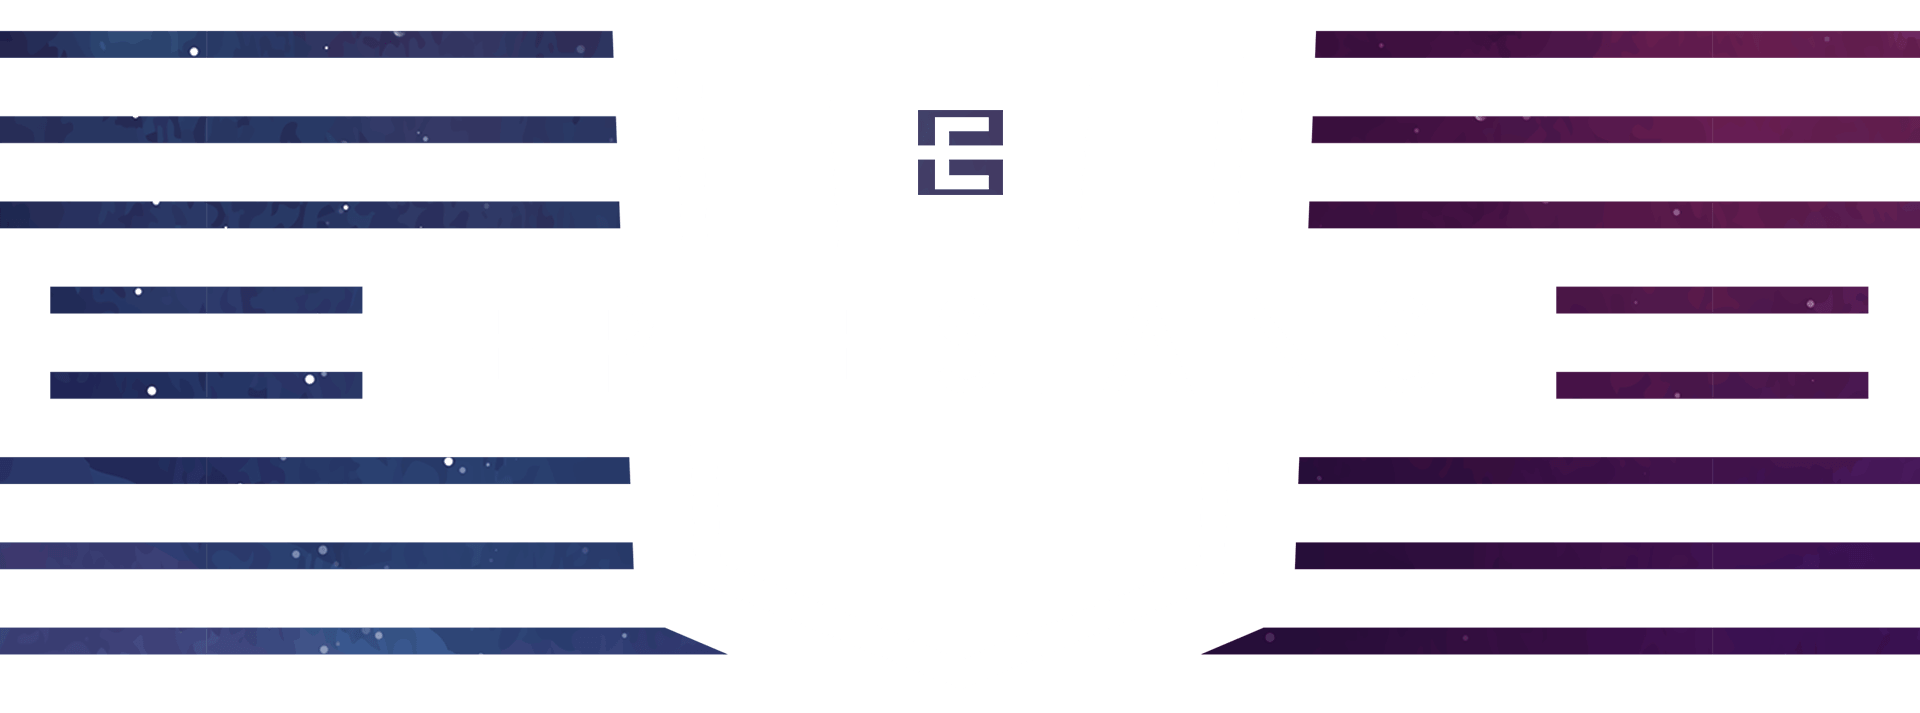 Ephesians WEB